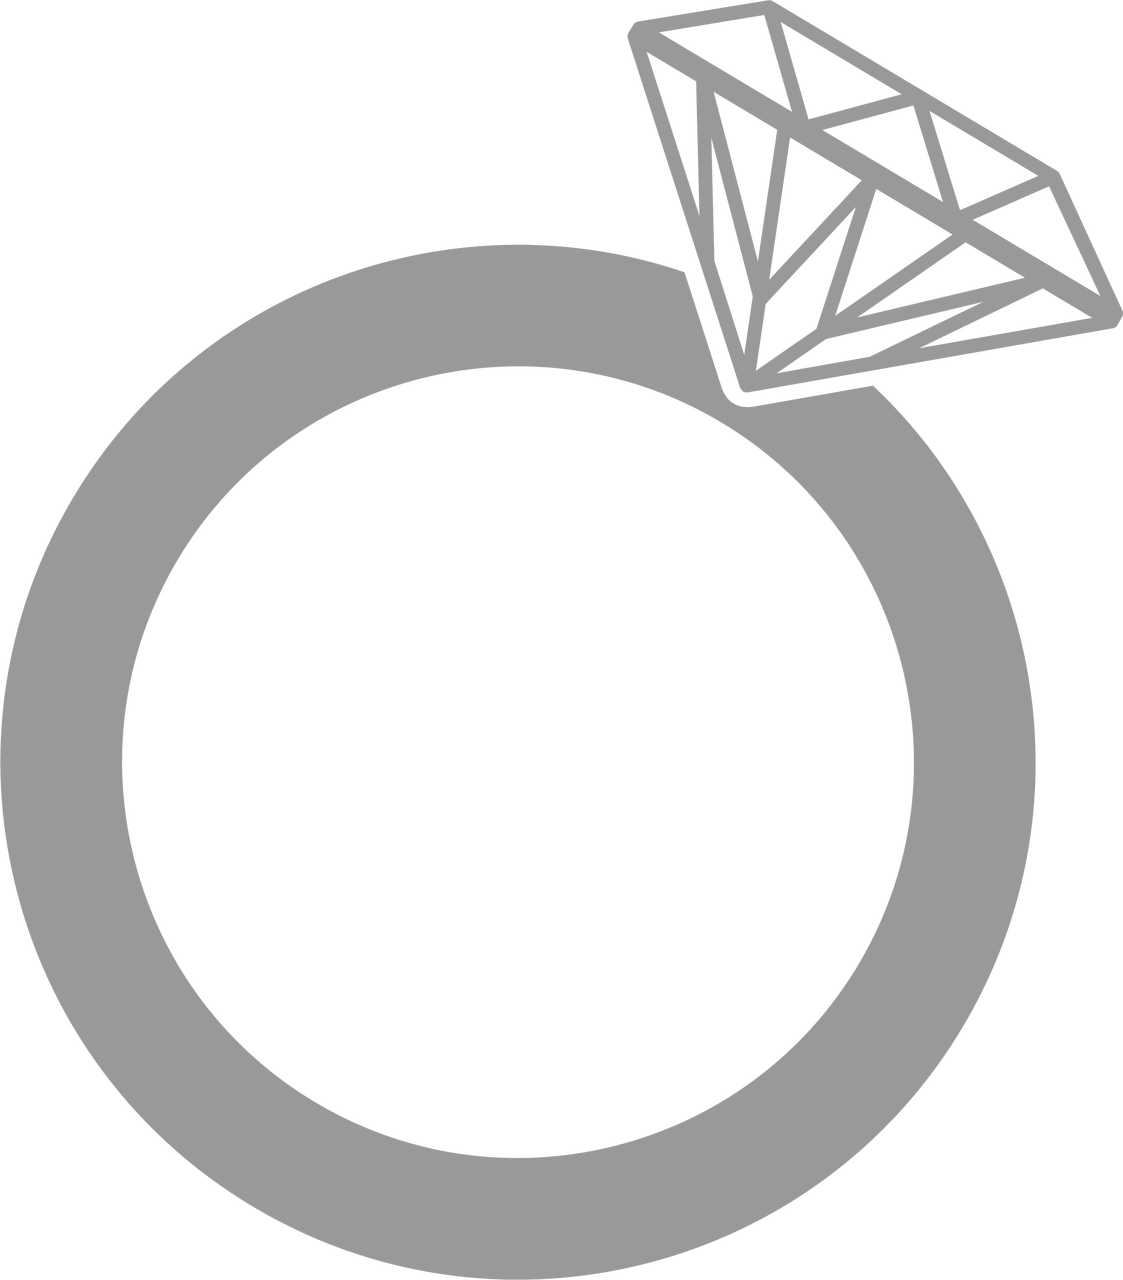 Diamond Ring #2 SVG Cut File - Snap Click Supply Co.